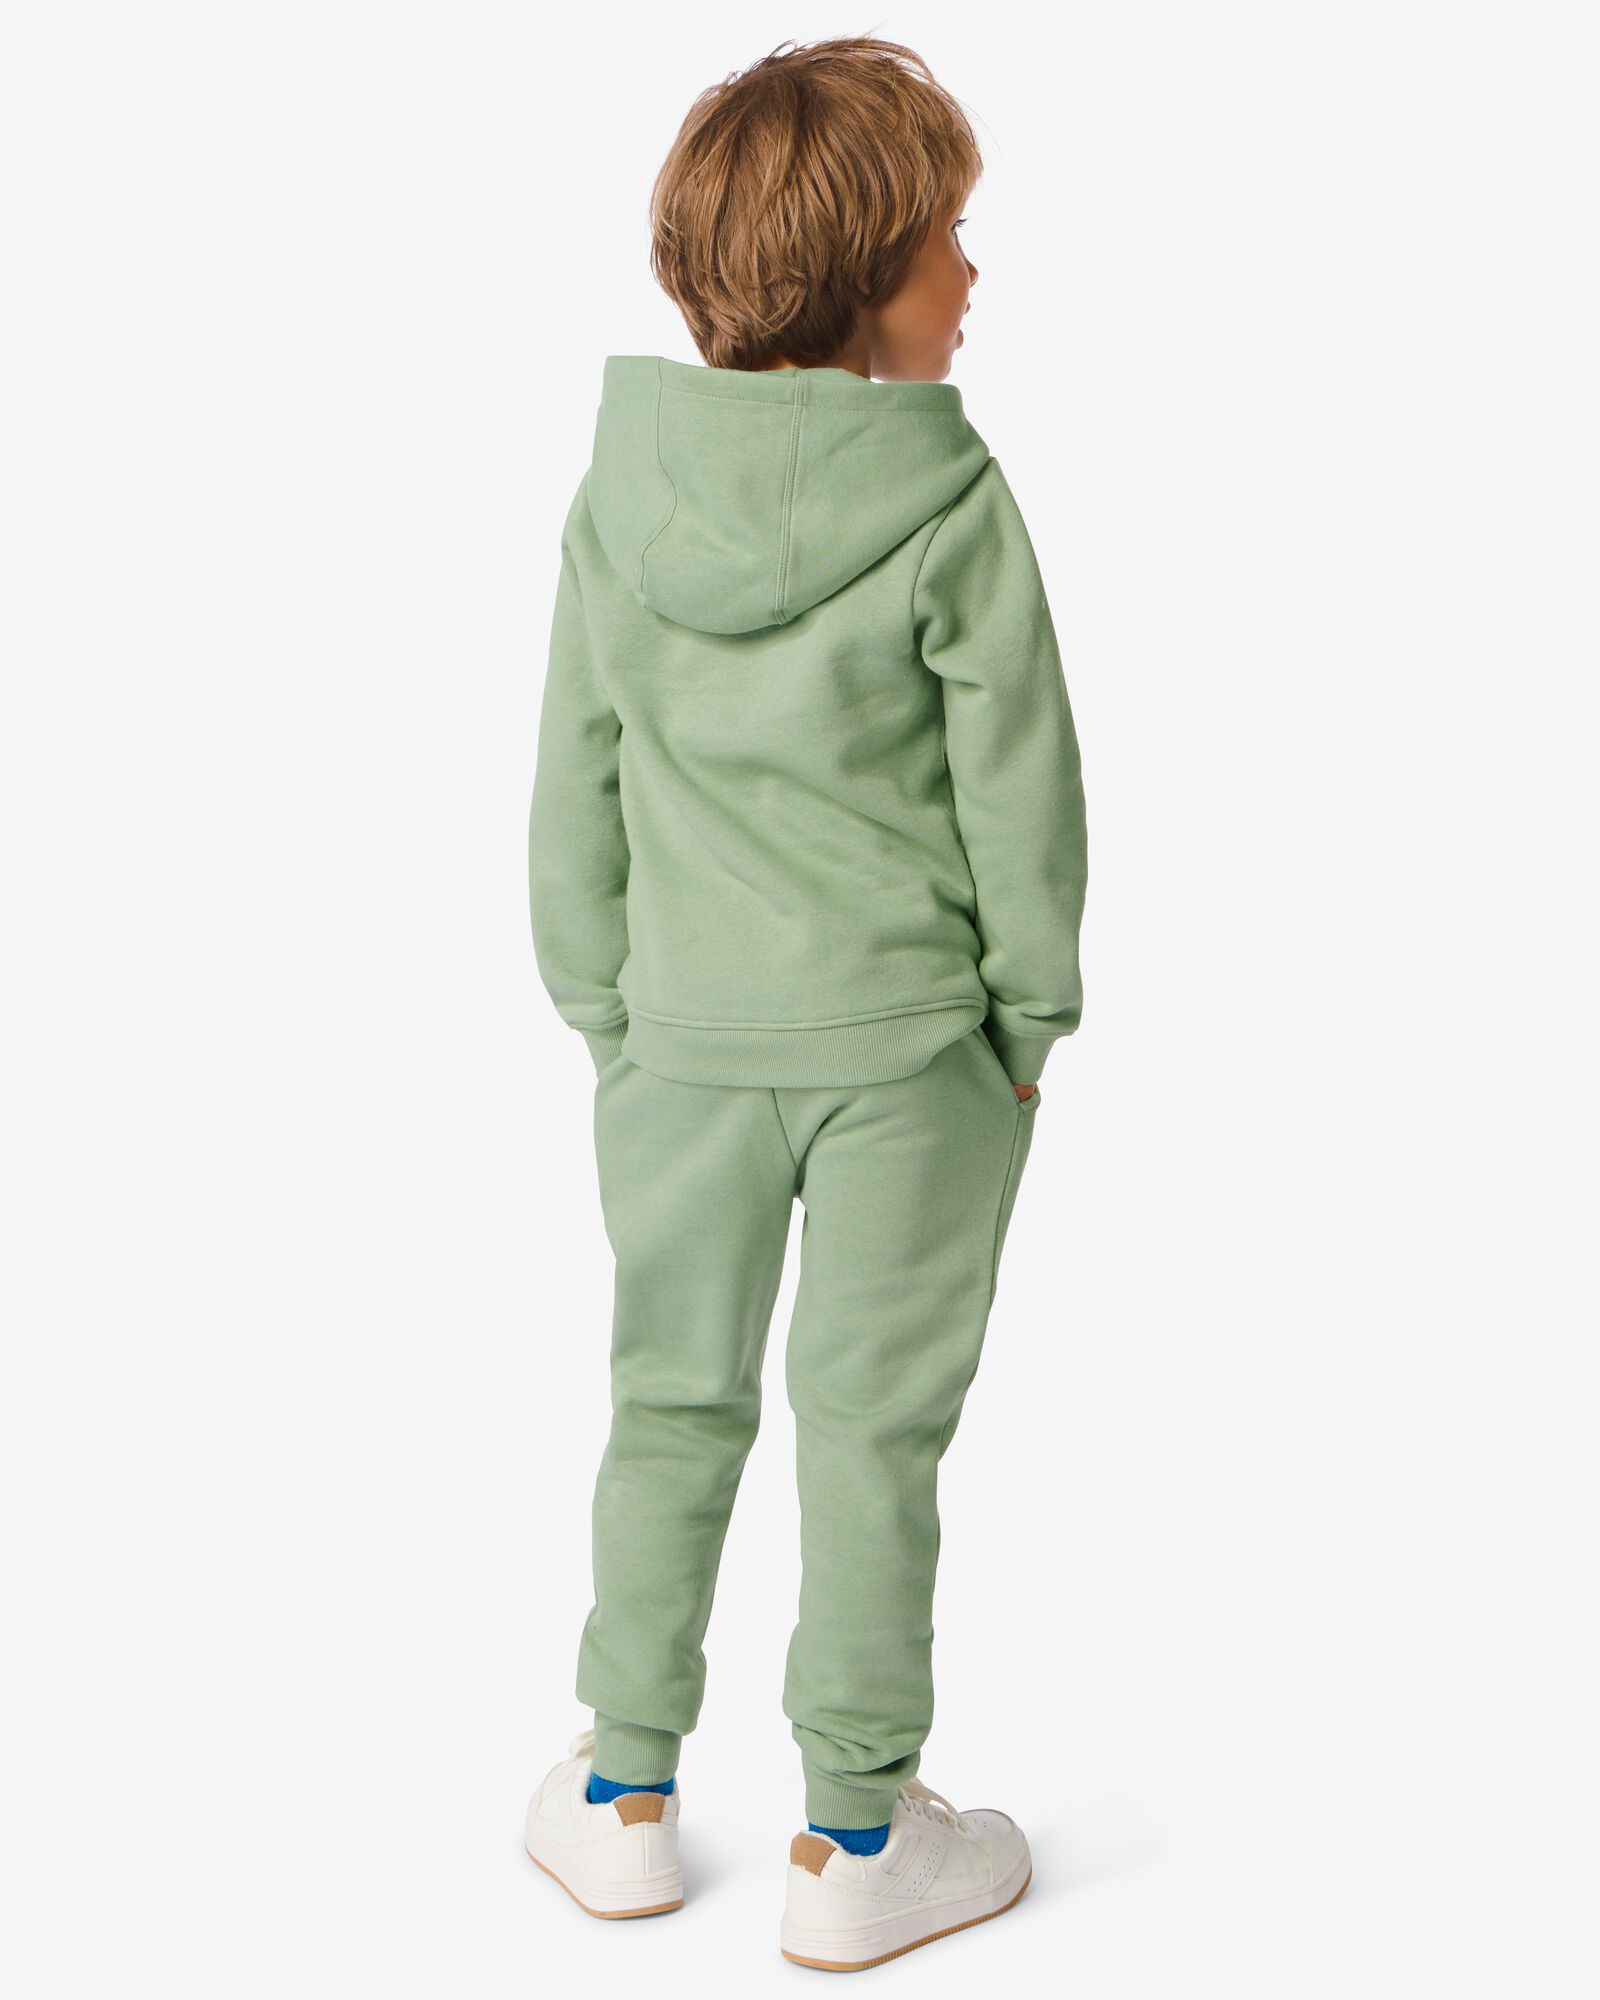 pantalon sweat enfant vert vert - 1000032264 - HEMA